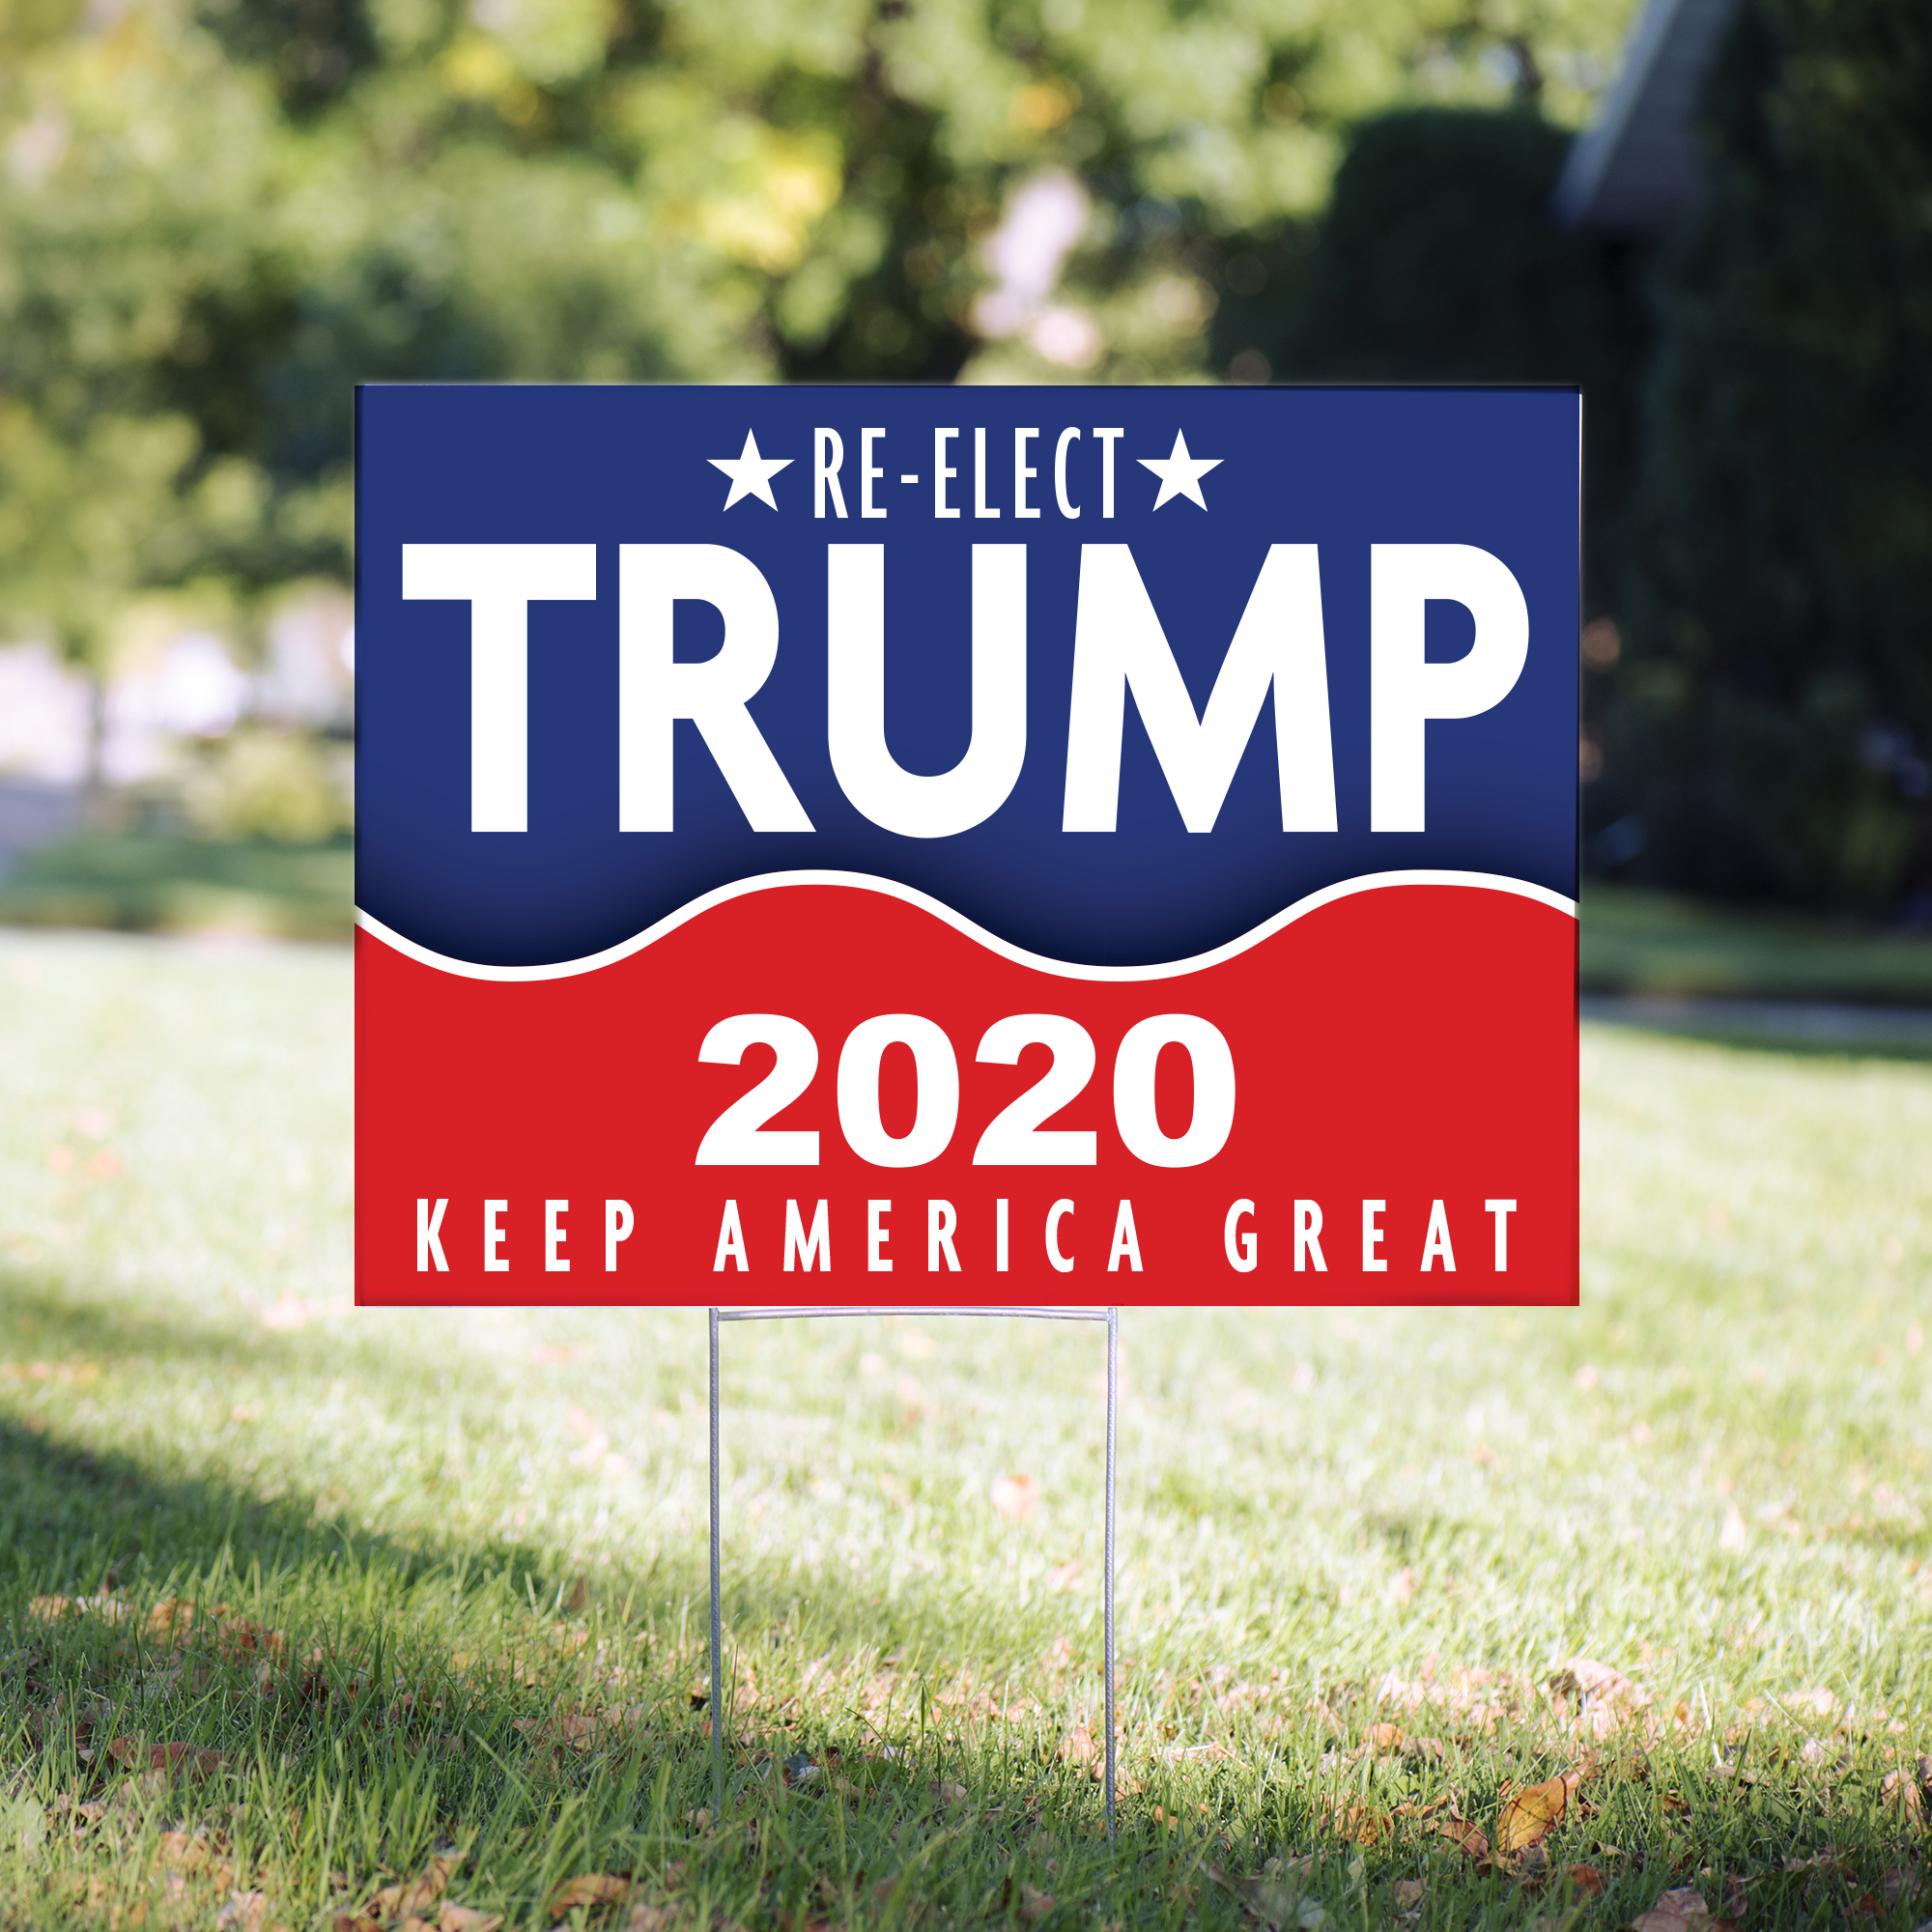 Trump Re-Elect 2020 Political Yard Sign - 24 x 18 inch